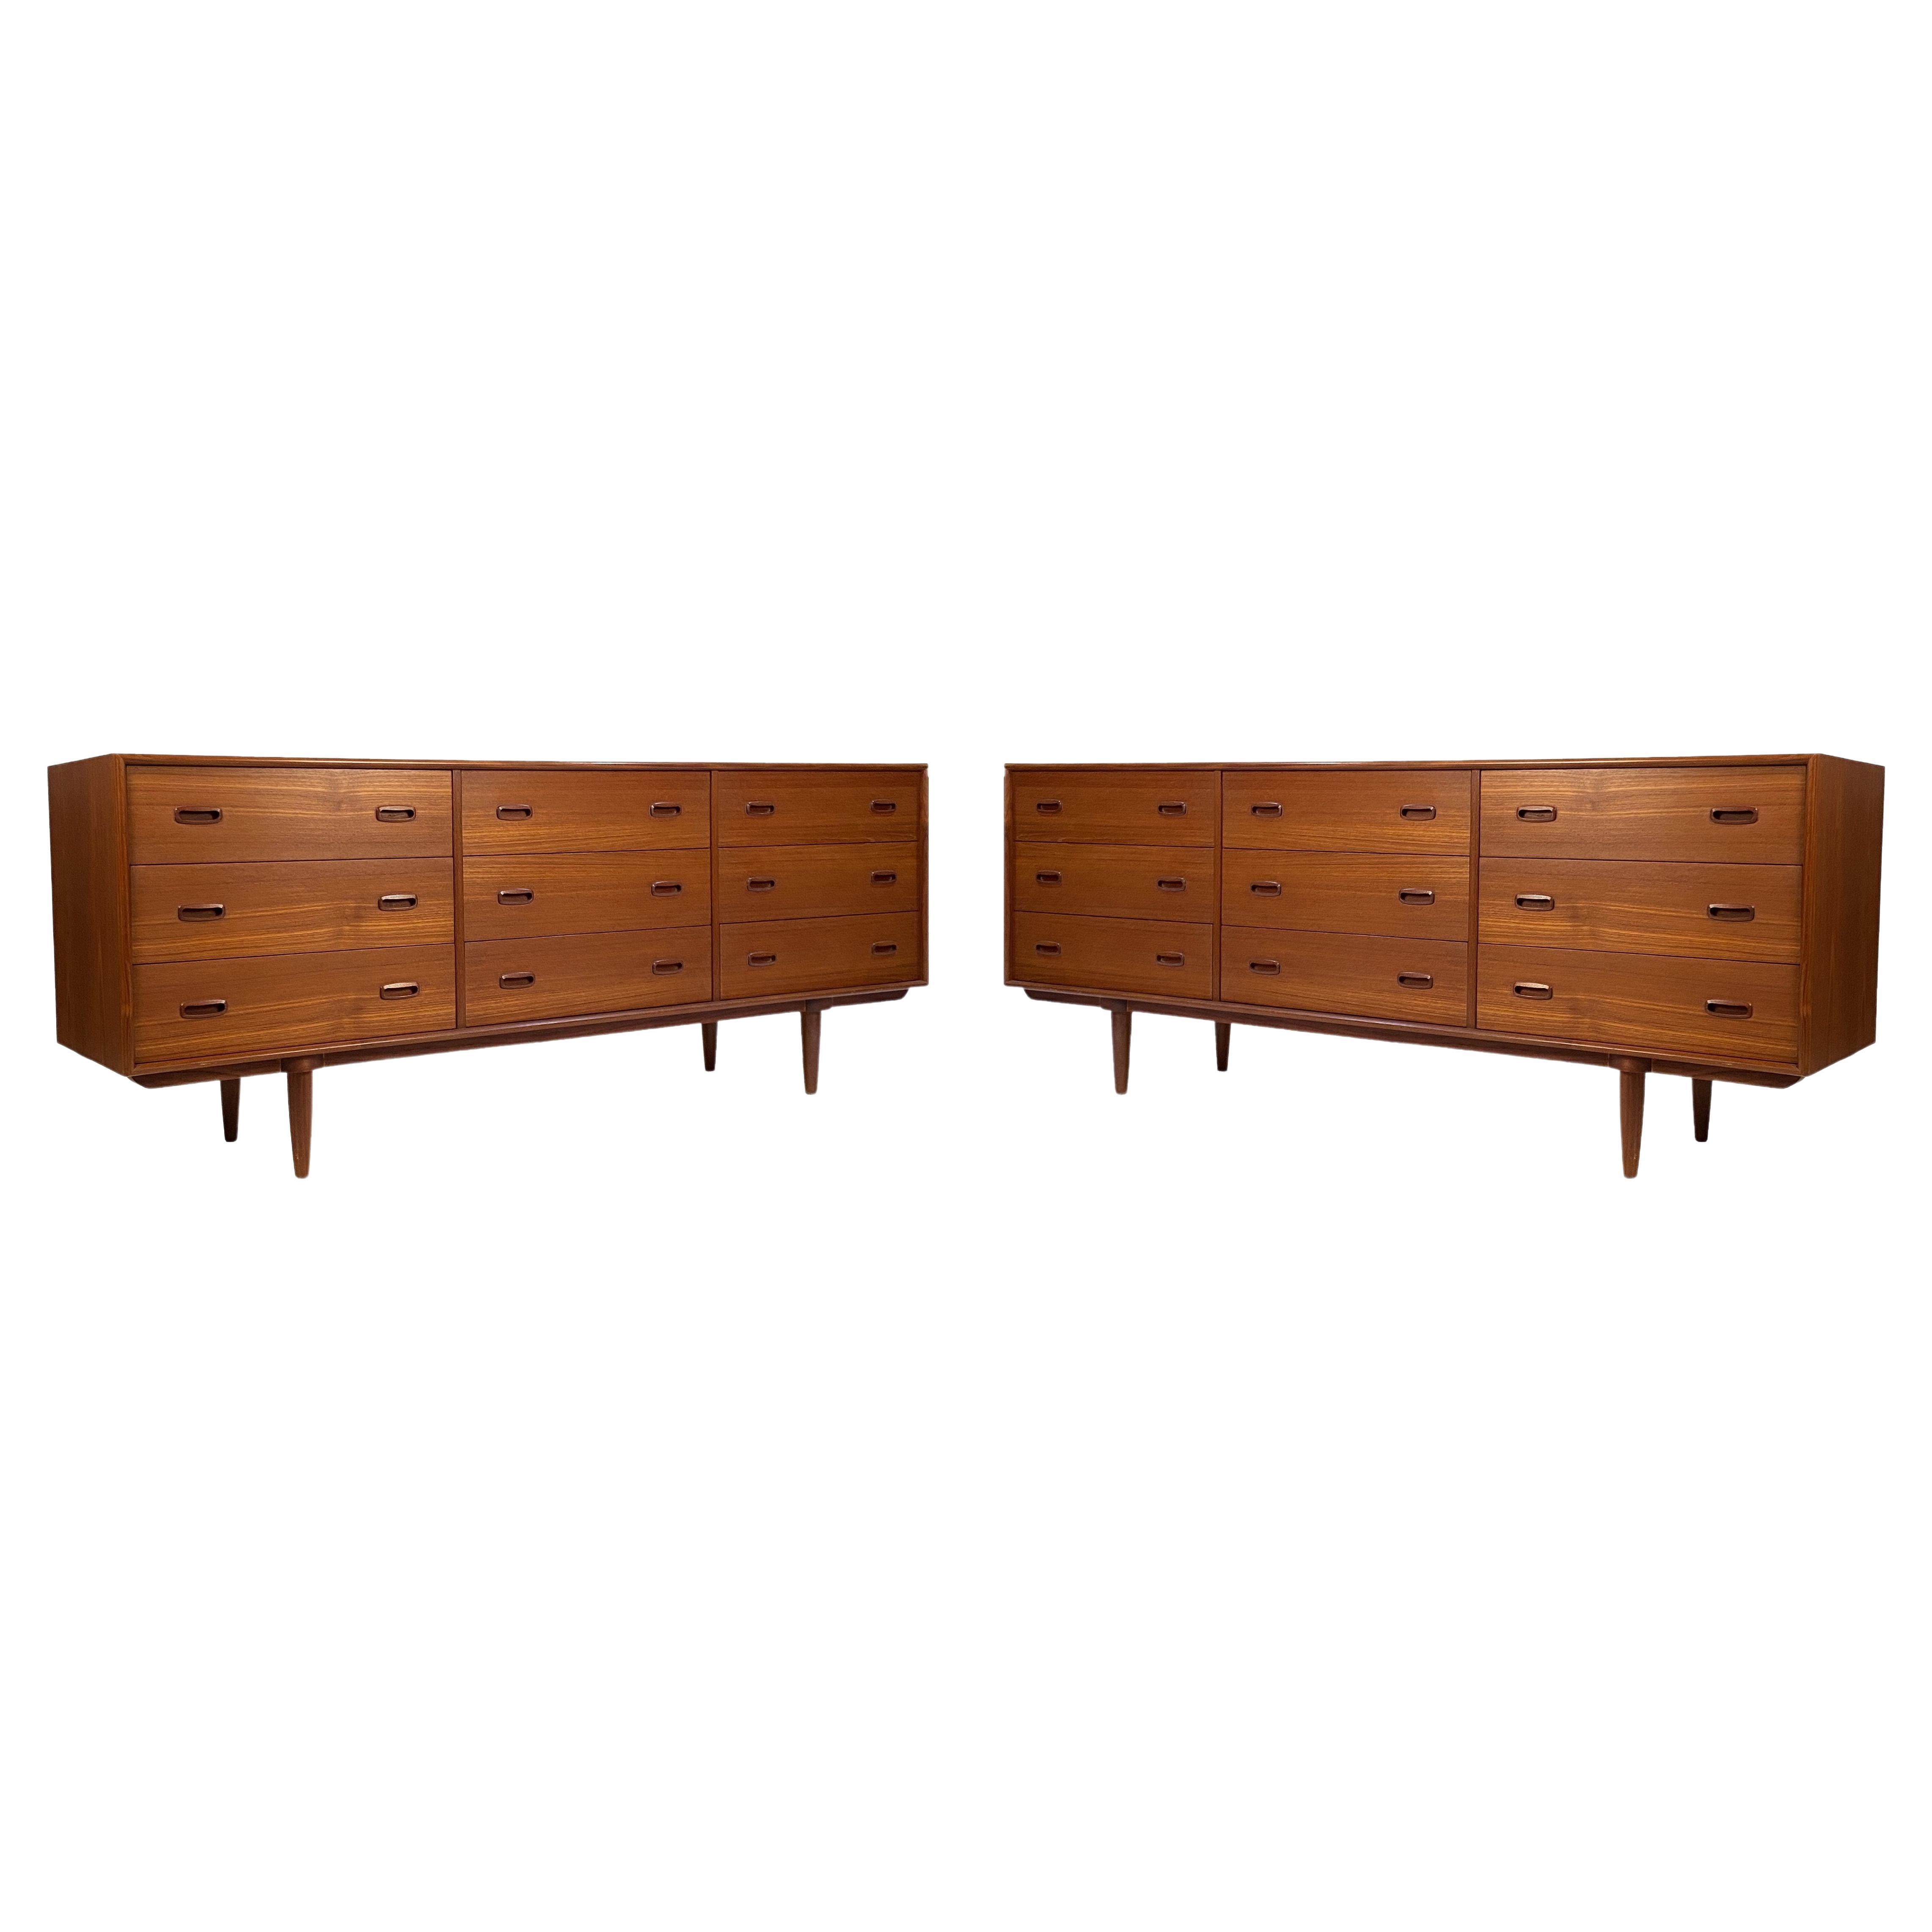 Danish Modern 9 Drawer Dressers in Teak with Oak Interiors 1960s, Pair